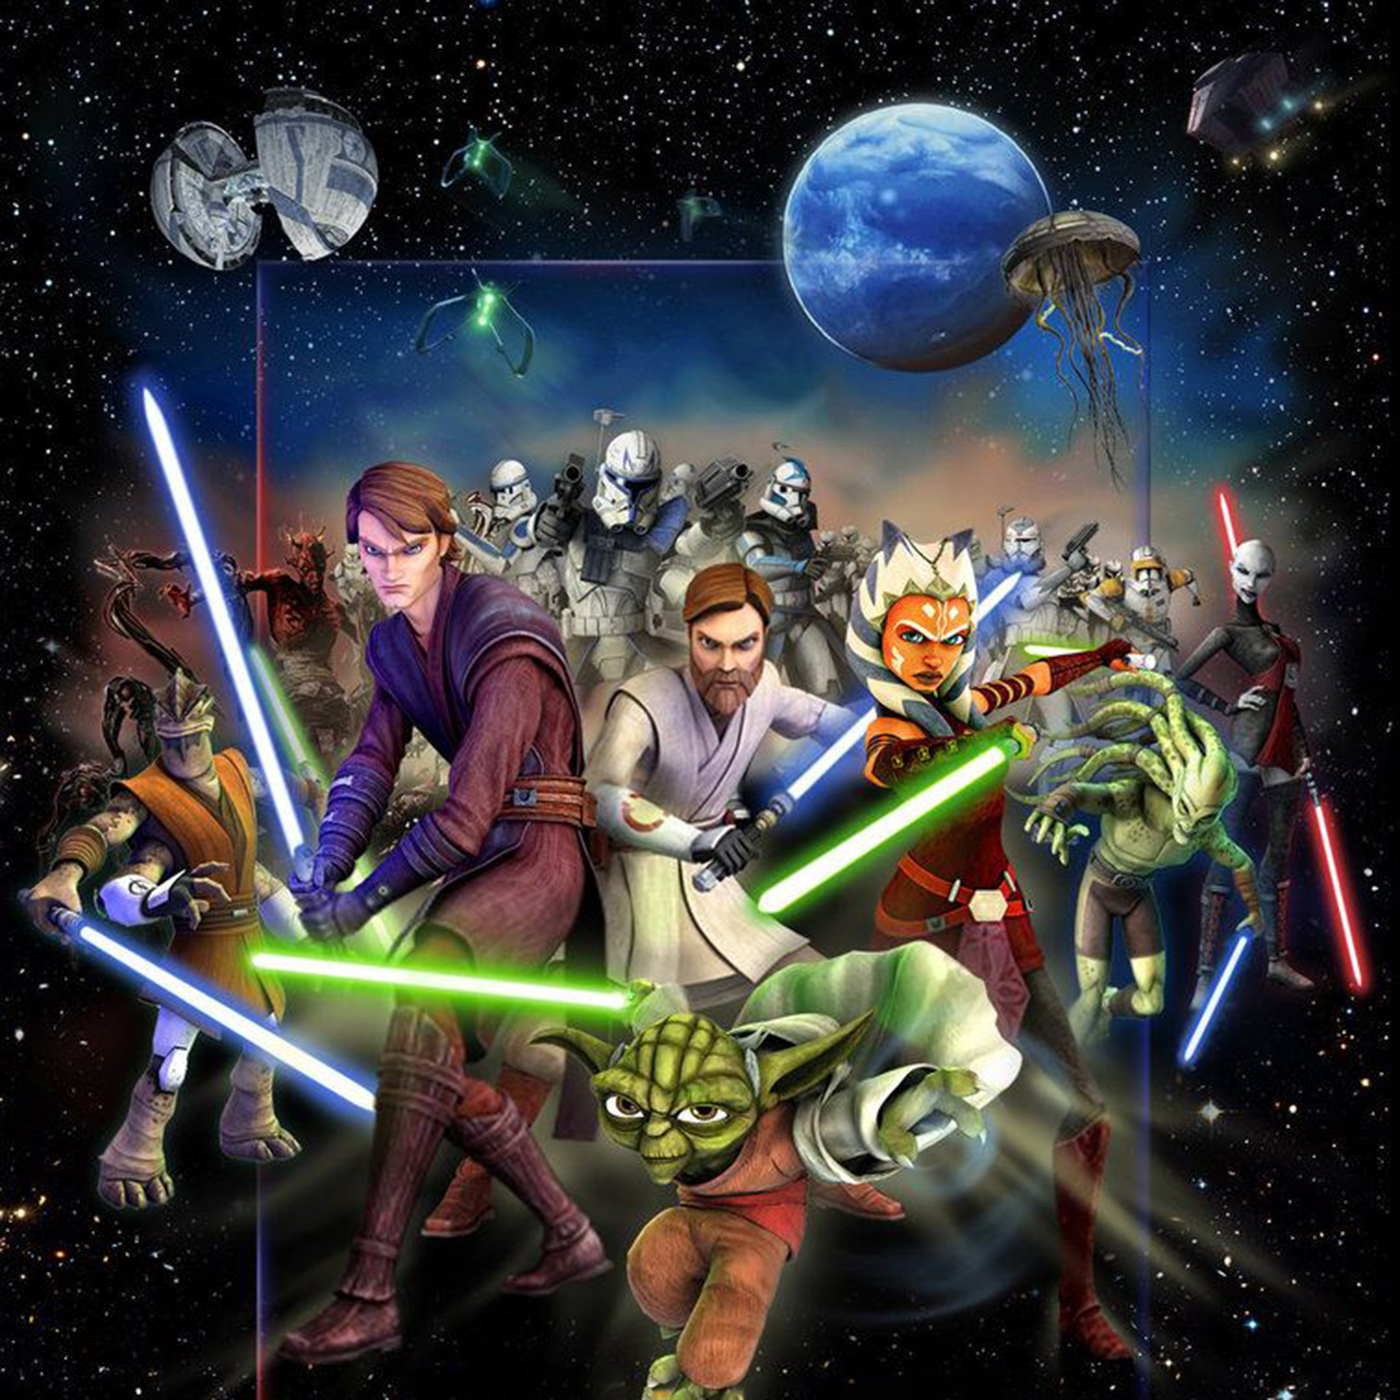 Star Wars: The Clone Wars Season 4